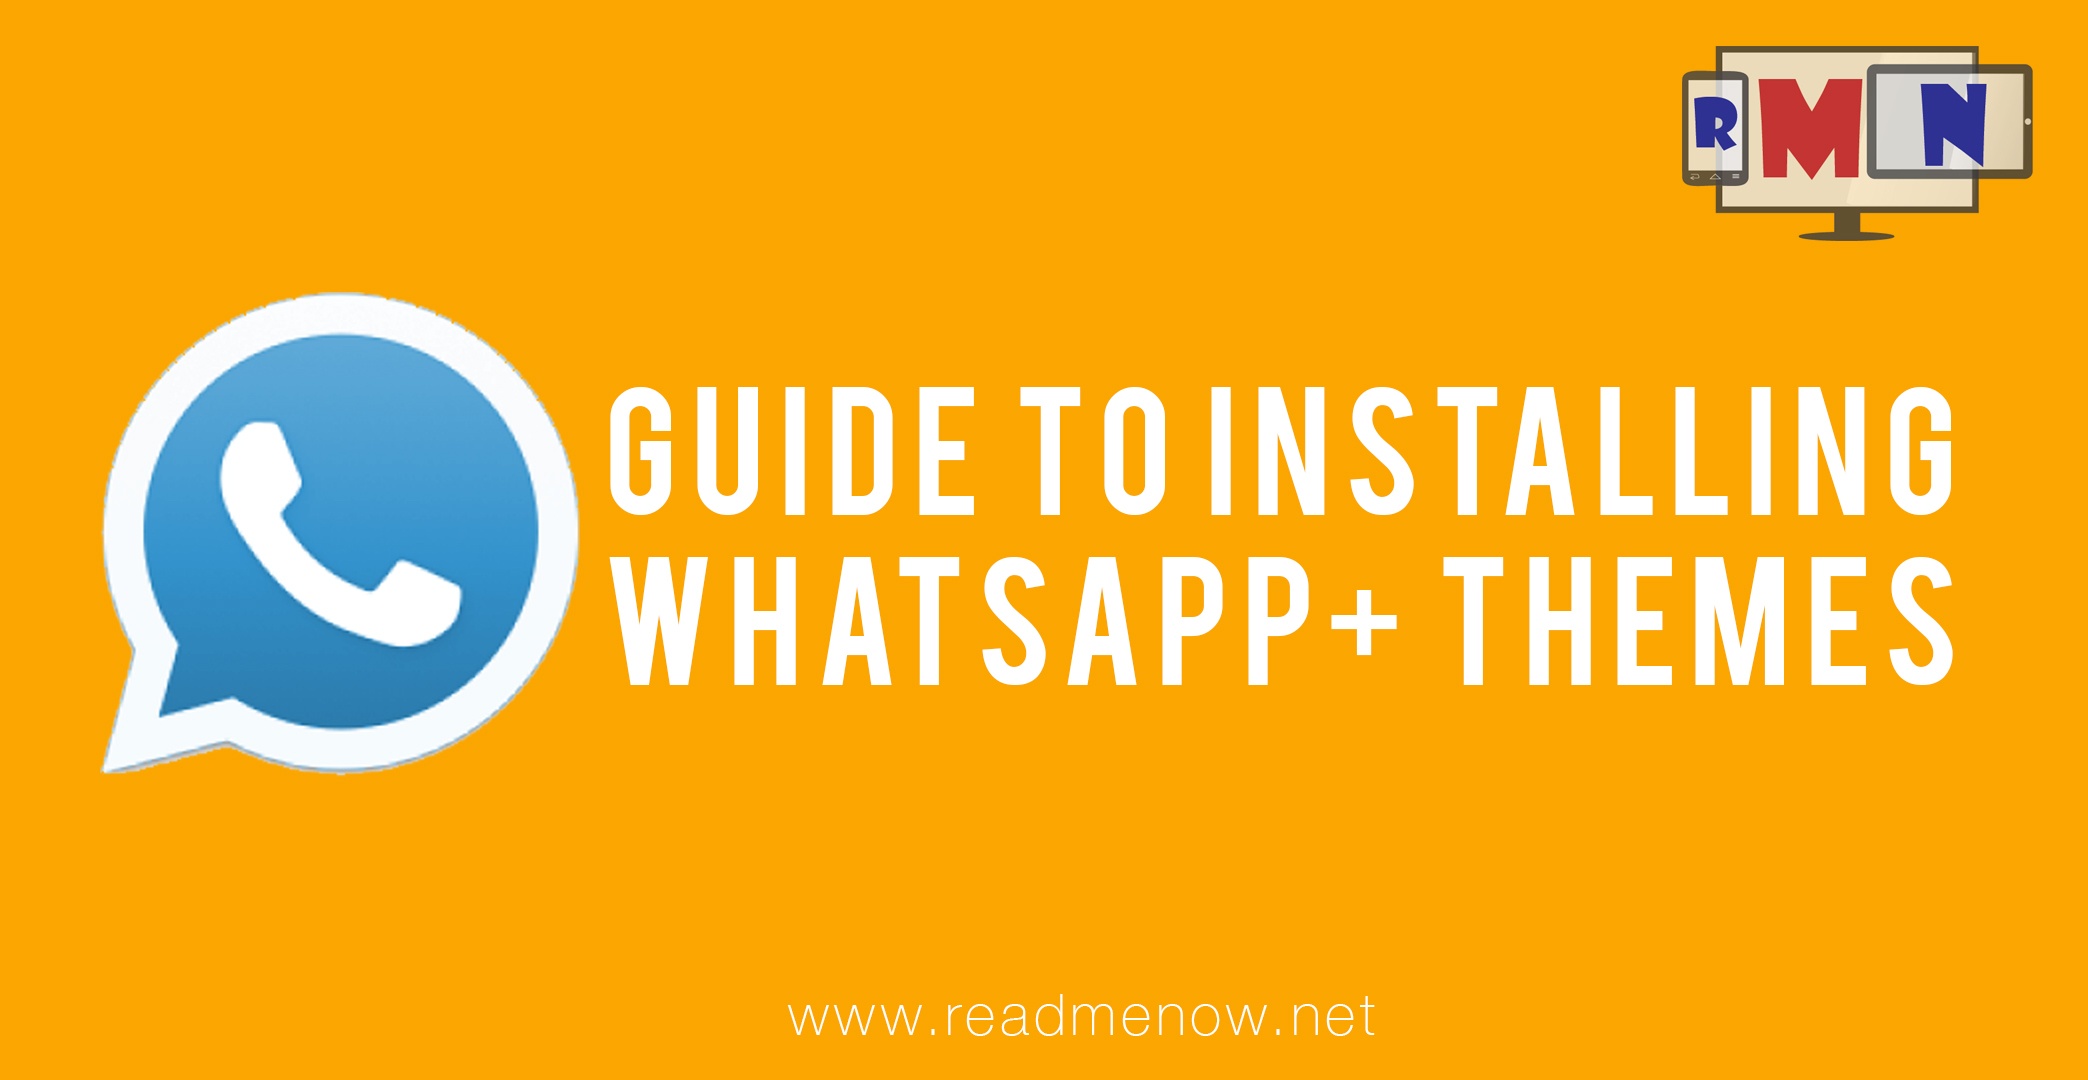 WhatsApp+ Themes by ReadMeNow